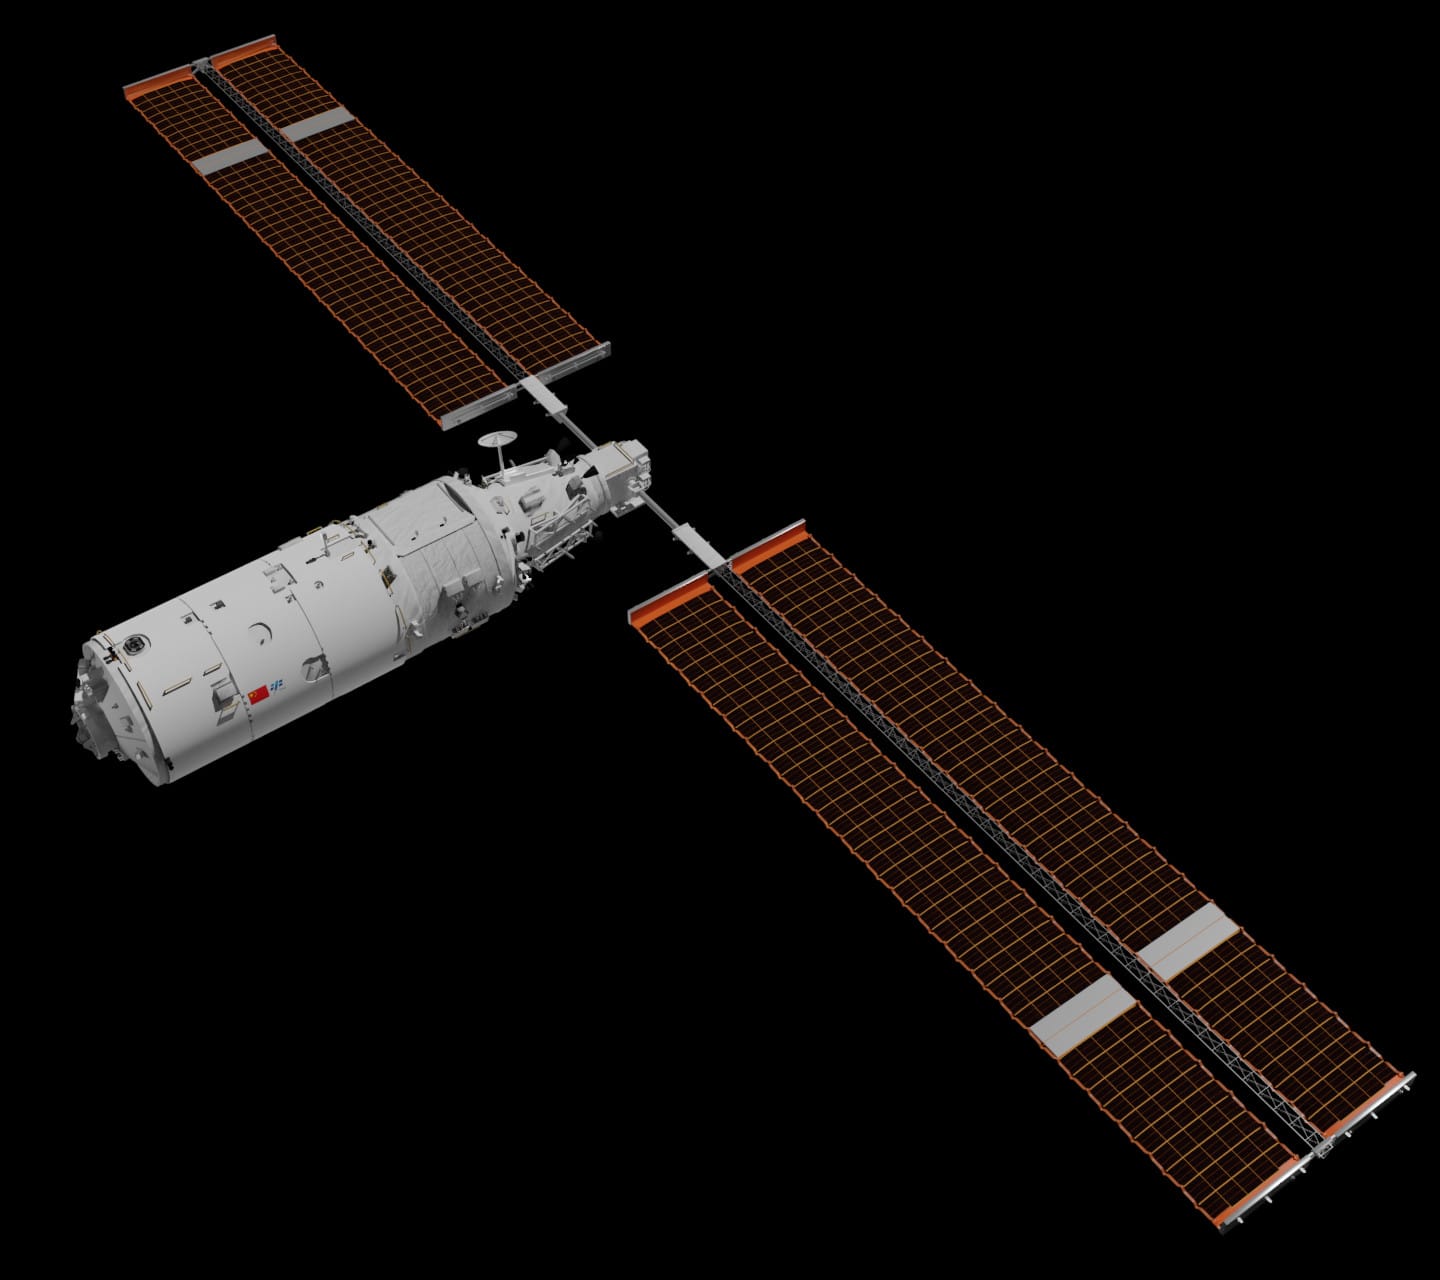 A render of the Mengtian module in free flight. ©Shujianyang/Wikimedia Commons